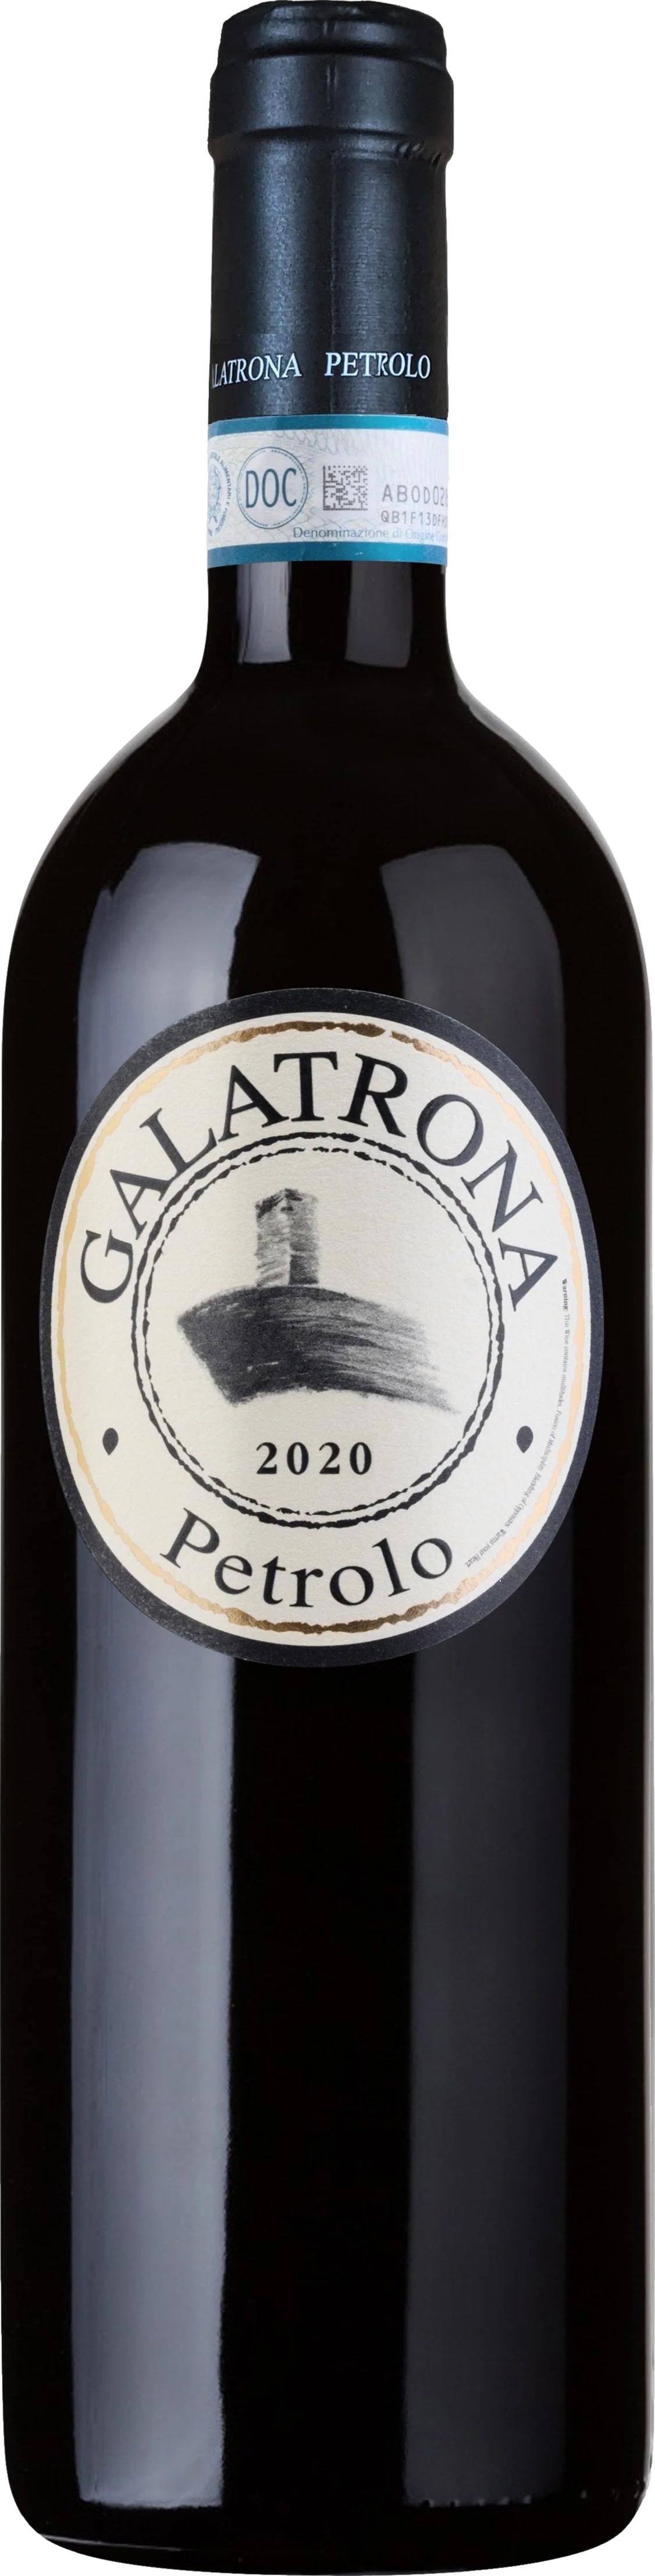 Petrolo Galatrona 2020 Červené 14.0% 0.75 l